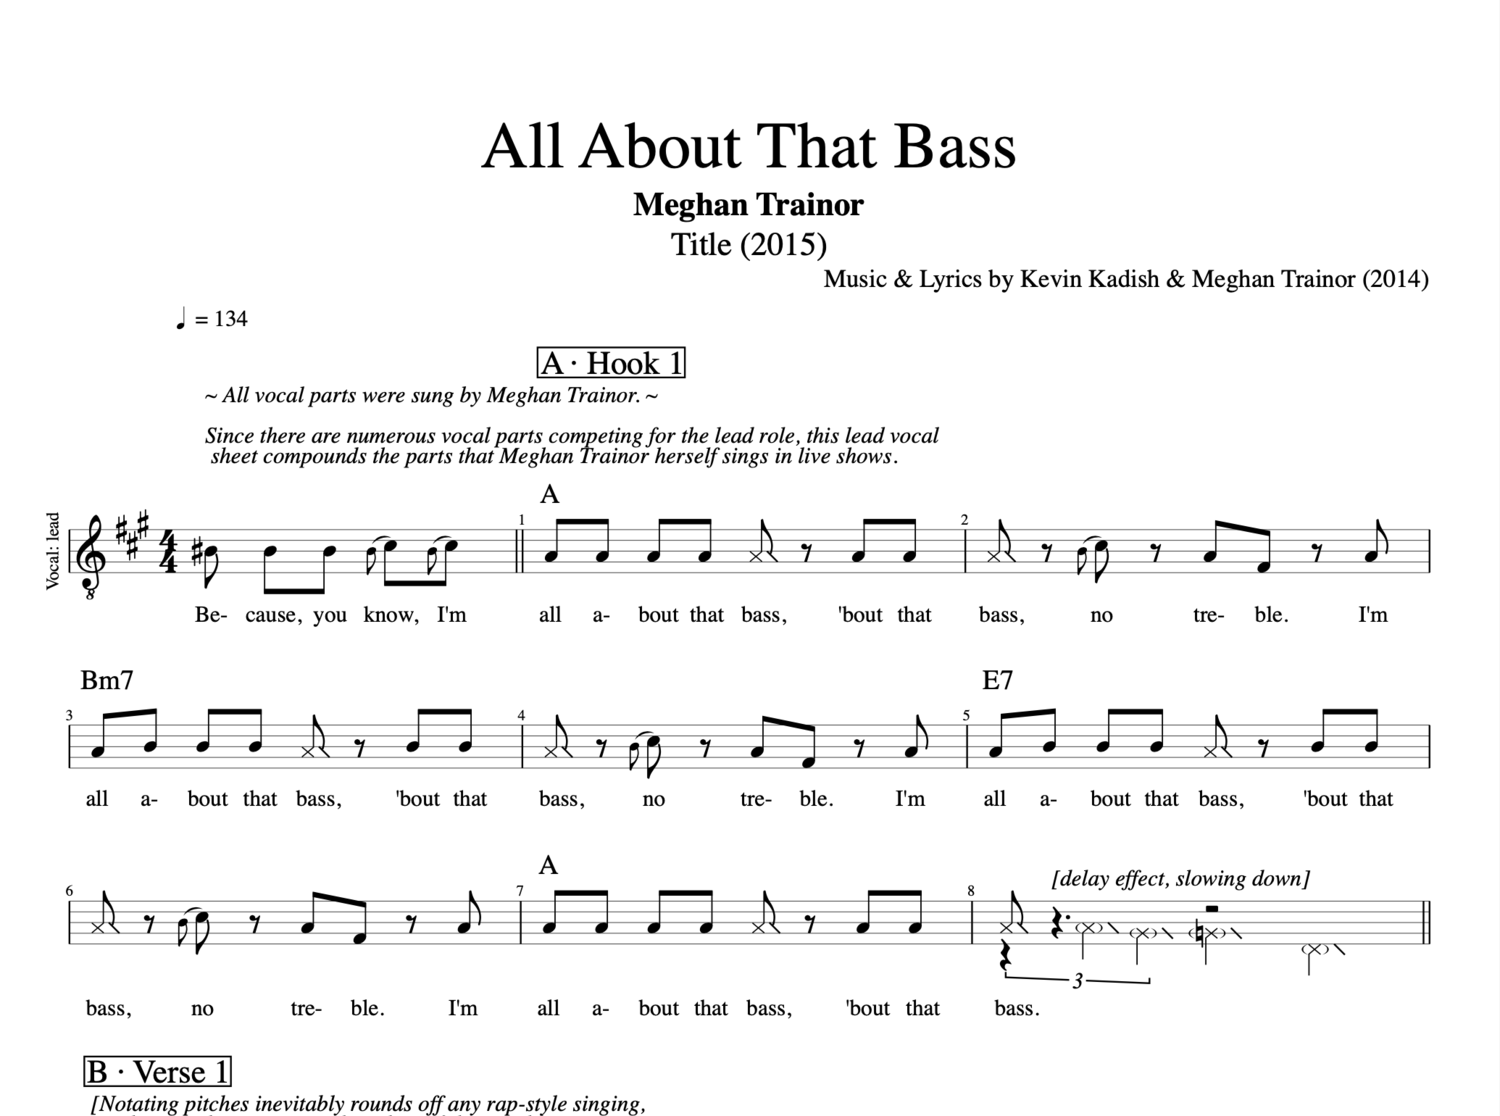 Lyrics, All About That Bass, Meghan Trainor